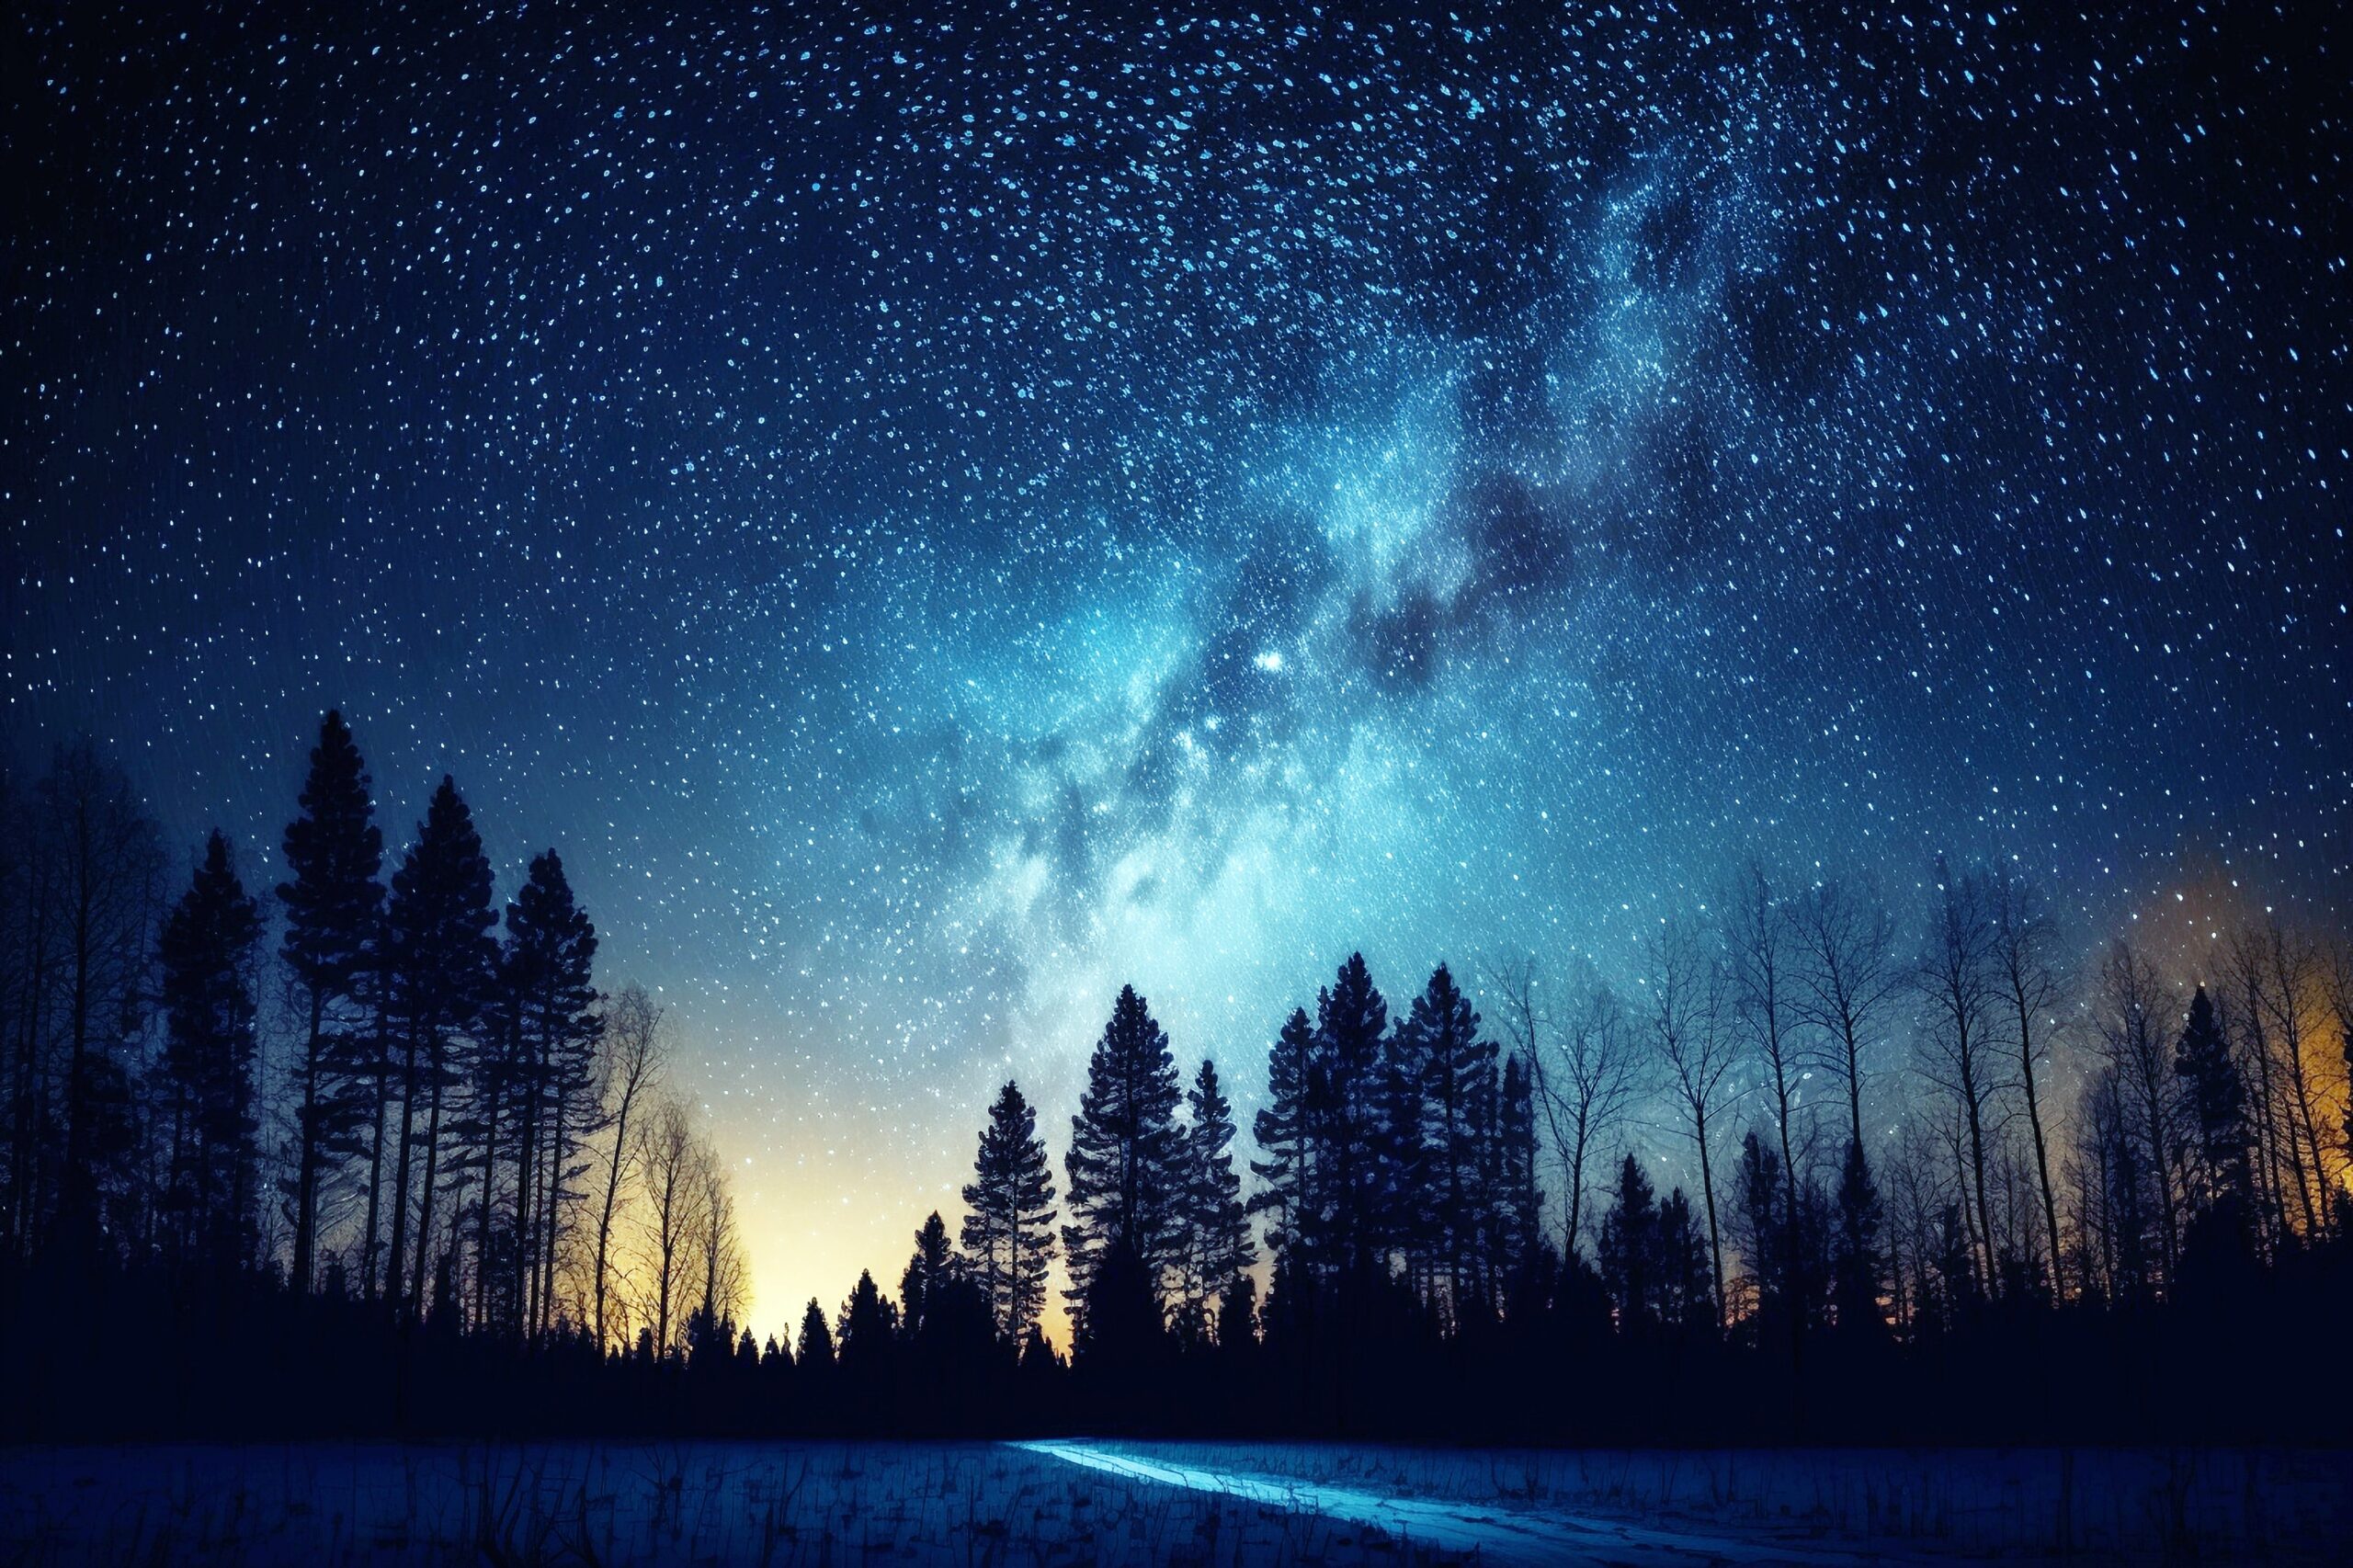 <img src="beautiful.jpg" alt="beautiful winter night sky with stars"/>